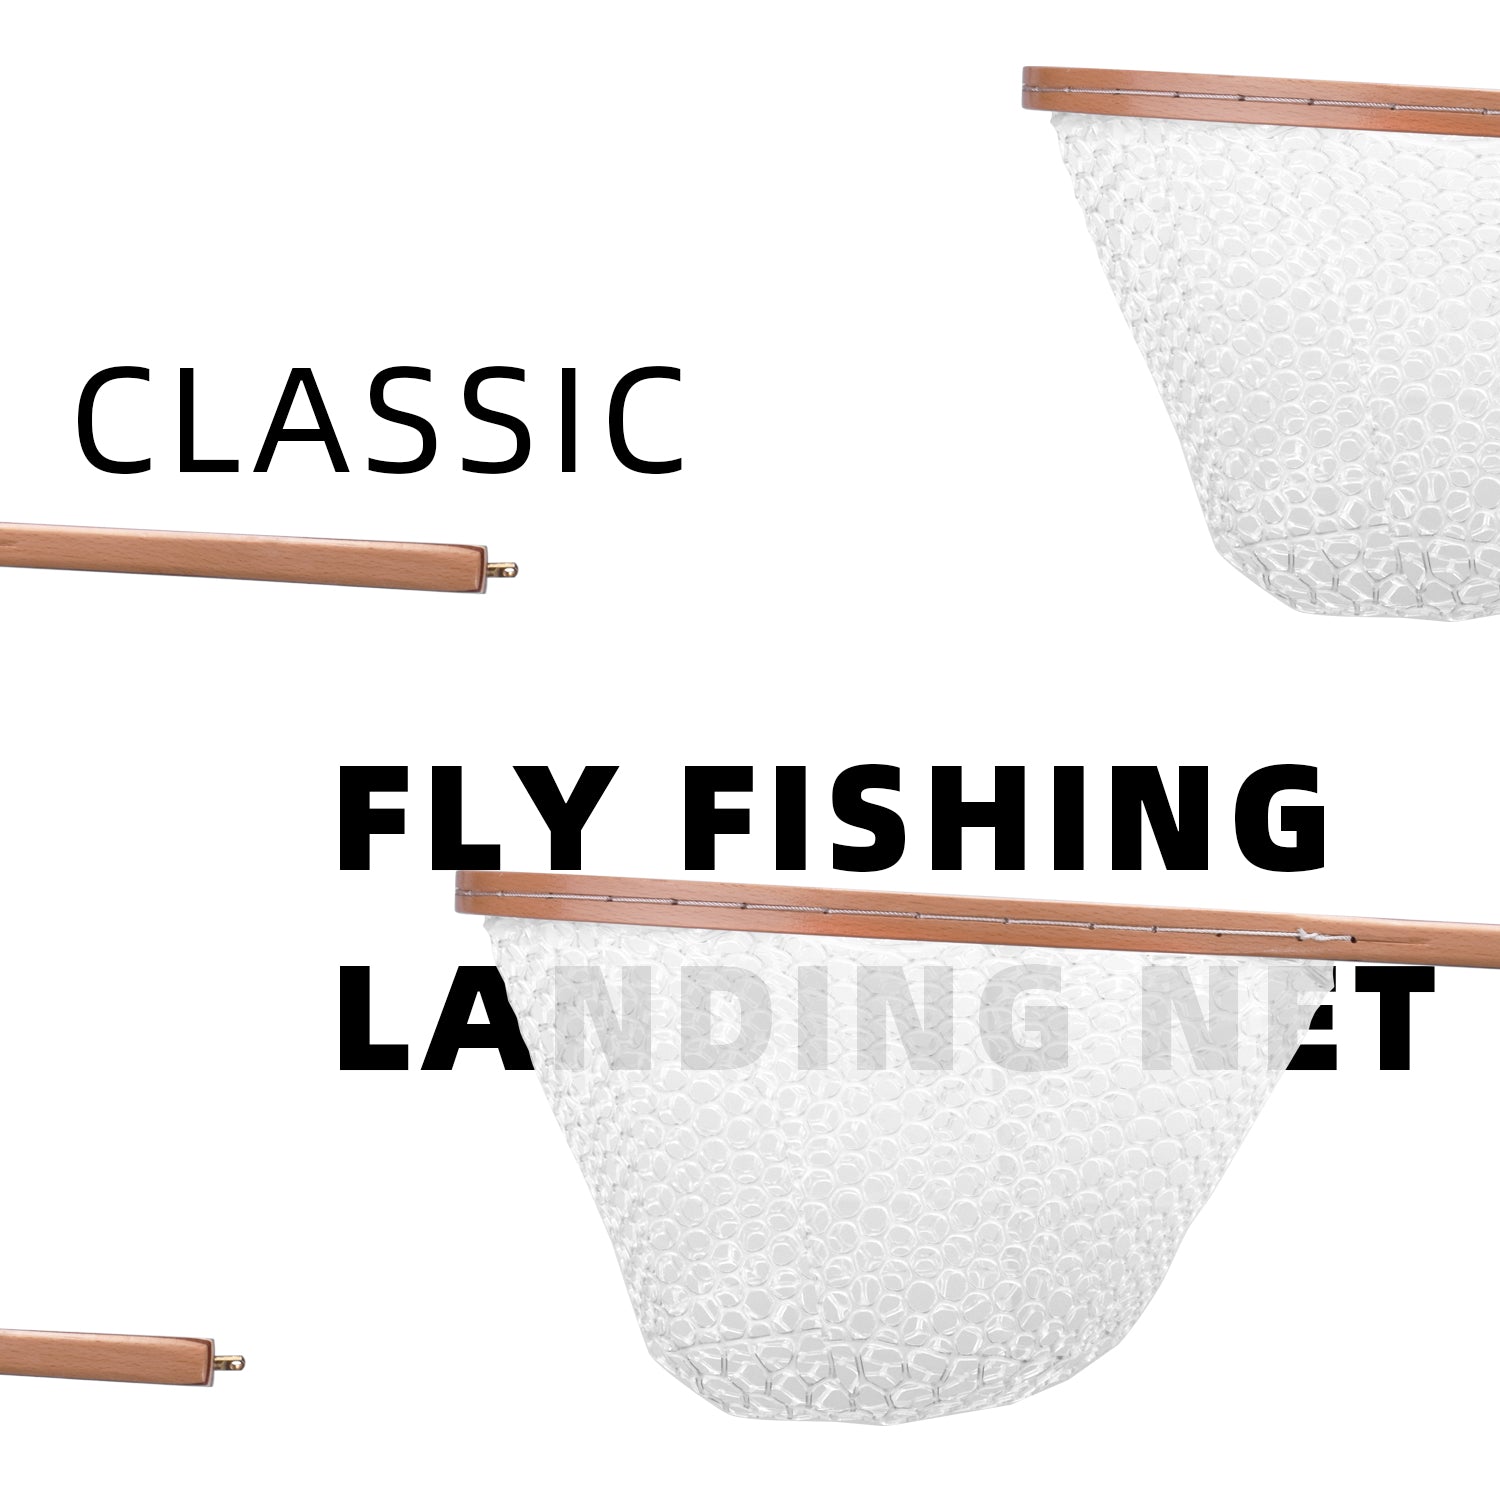 Fly Fishing Landing Nets